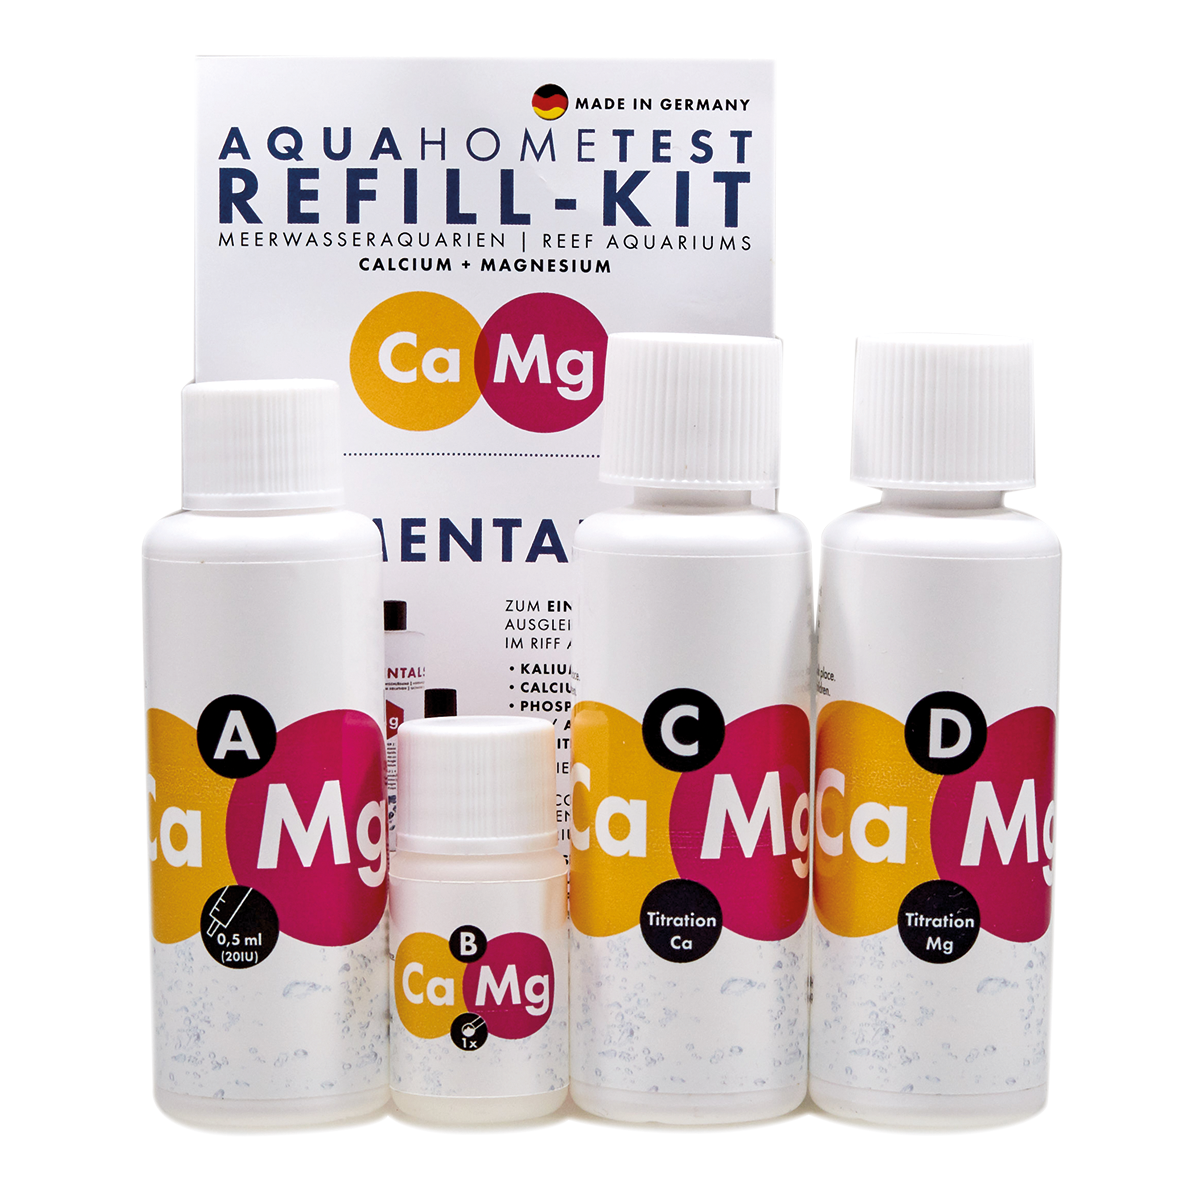 Fauna Marin Aquahometest Ca+Mg Calcium + Magnesium Test Kit Refill